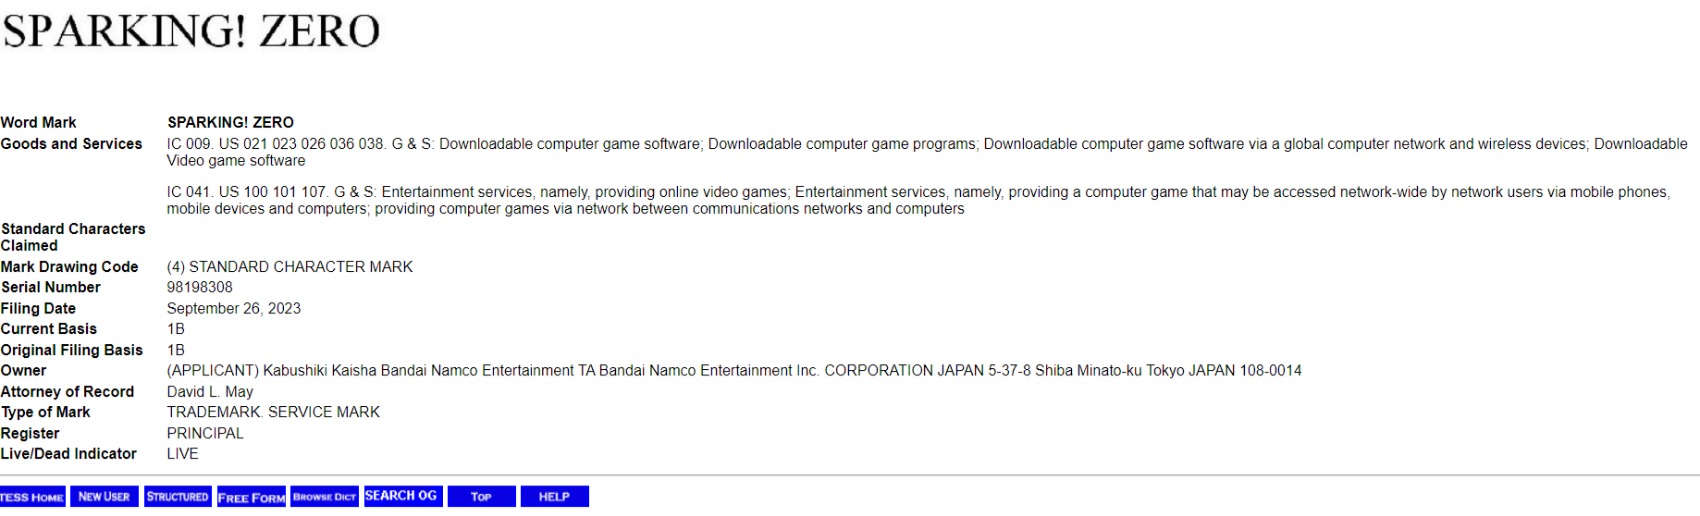 Bandi Namco has recently filed the Sparking! Zero Trademark.